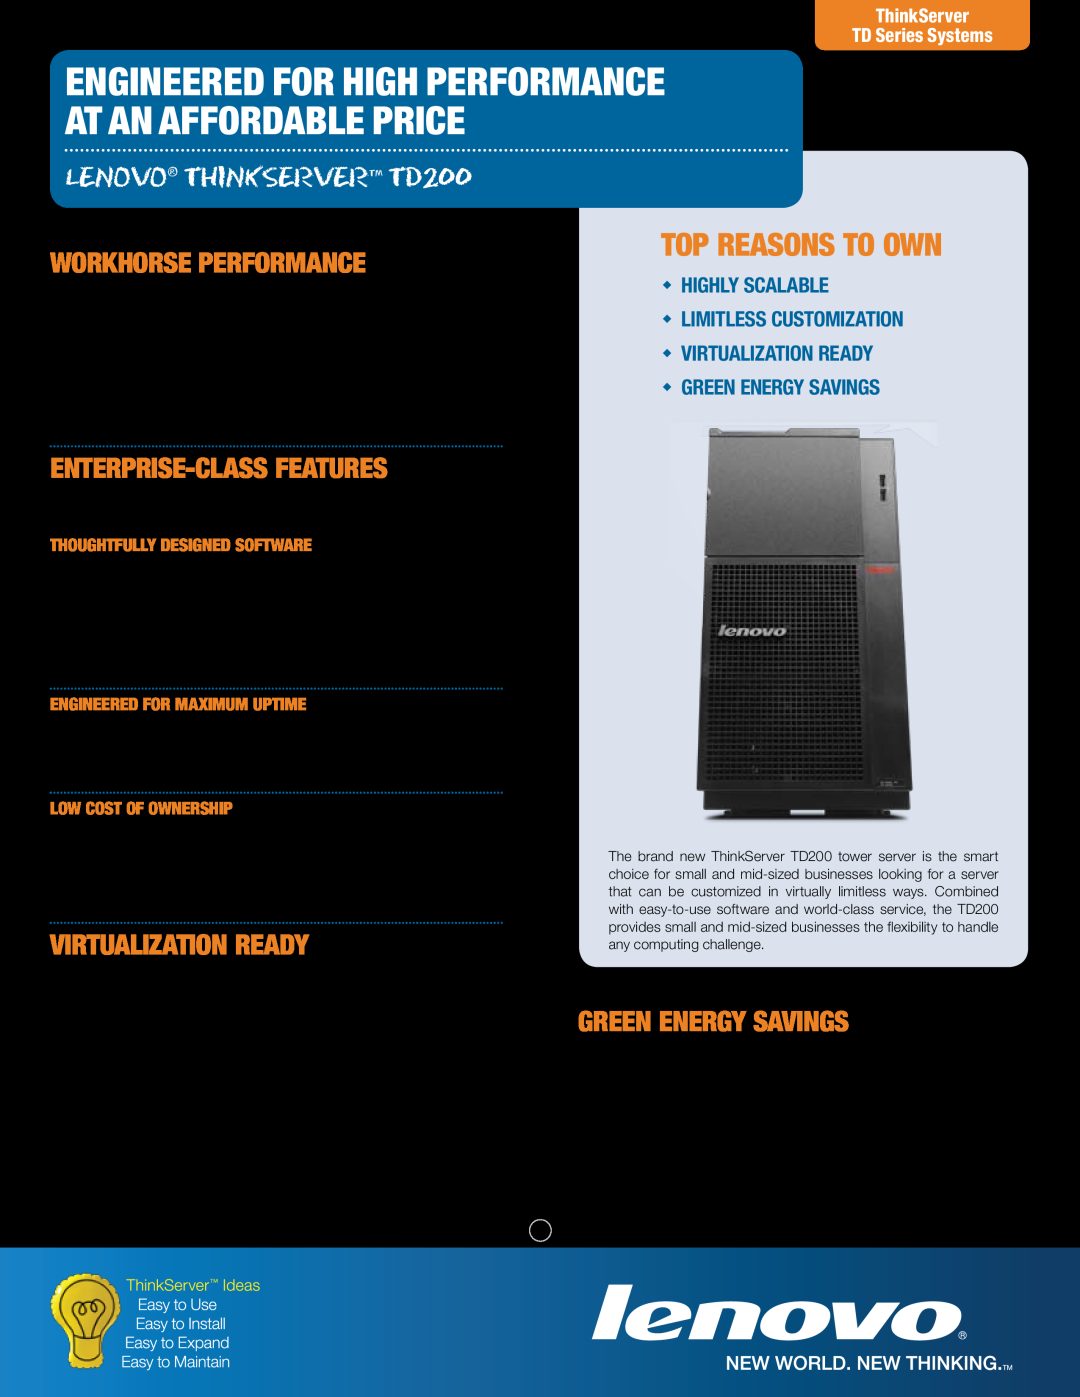 Lenovo manual LENOVO THINKSERVER TD200, Thoughtfully Designed Software, Engineered for Maximum Uptime 